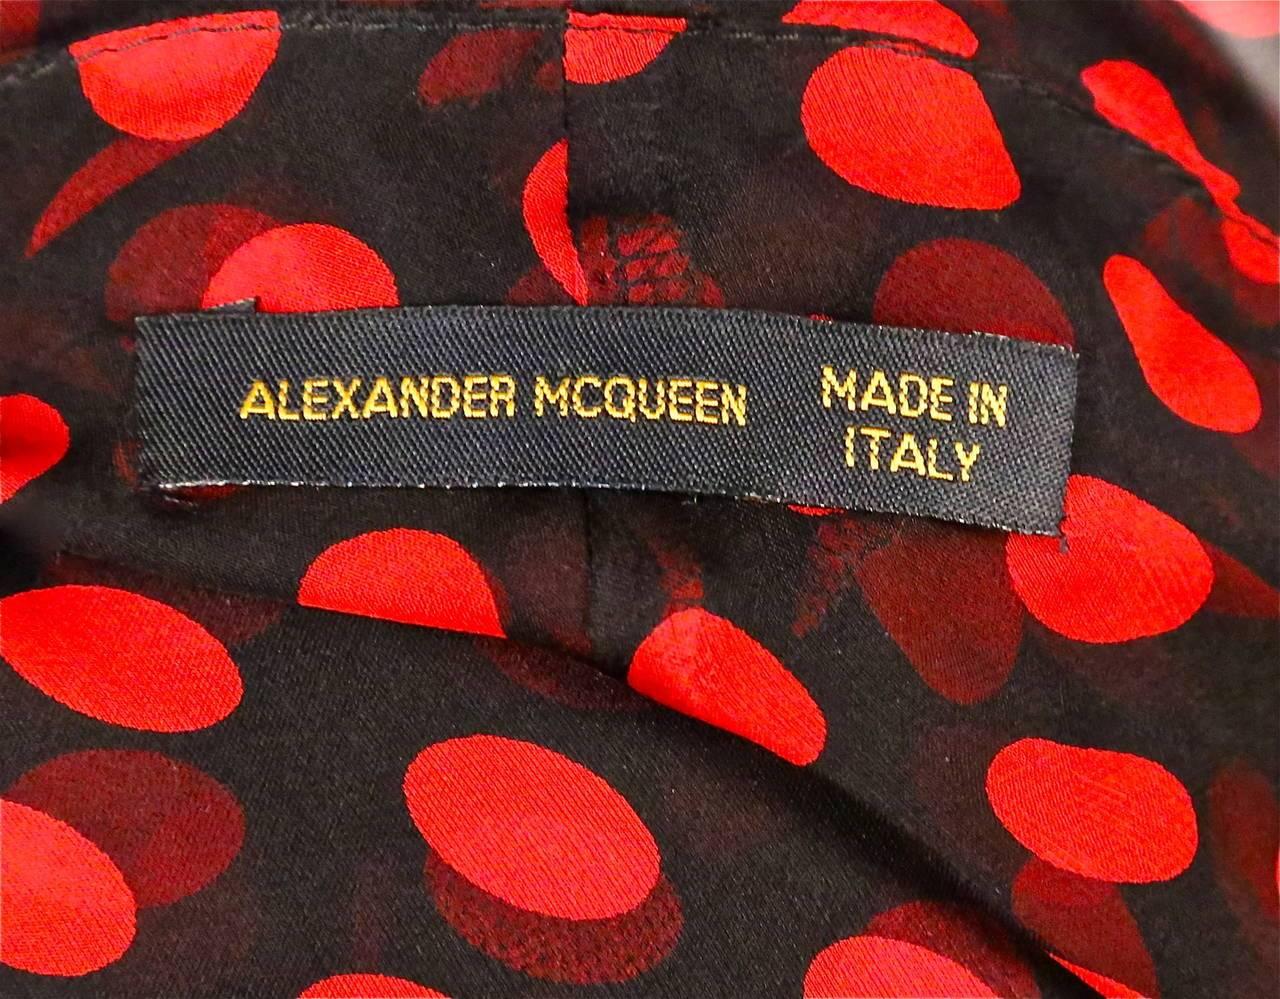 Women's 2003 ALEXANDER MCQUEEN black tiered RUNWAY gown with red polka dots